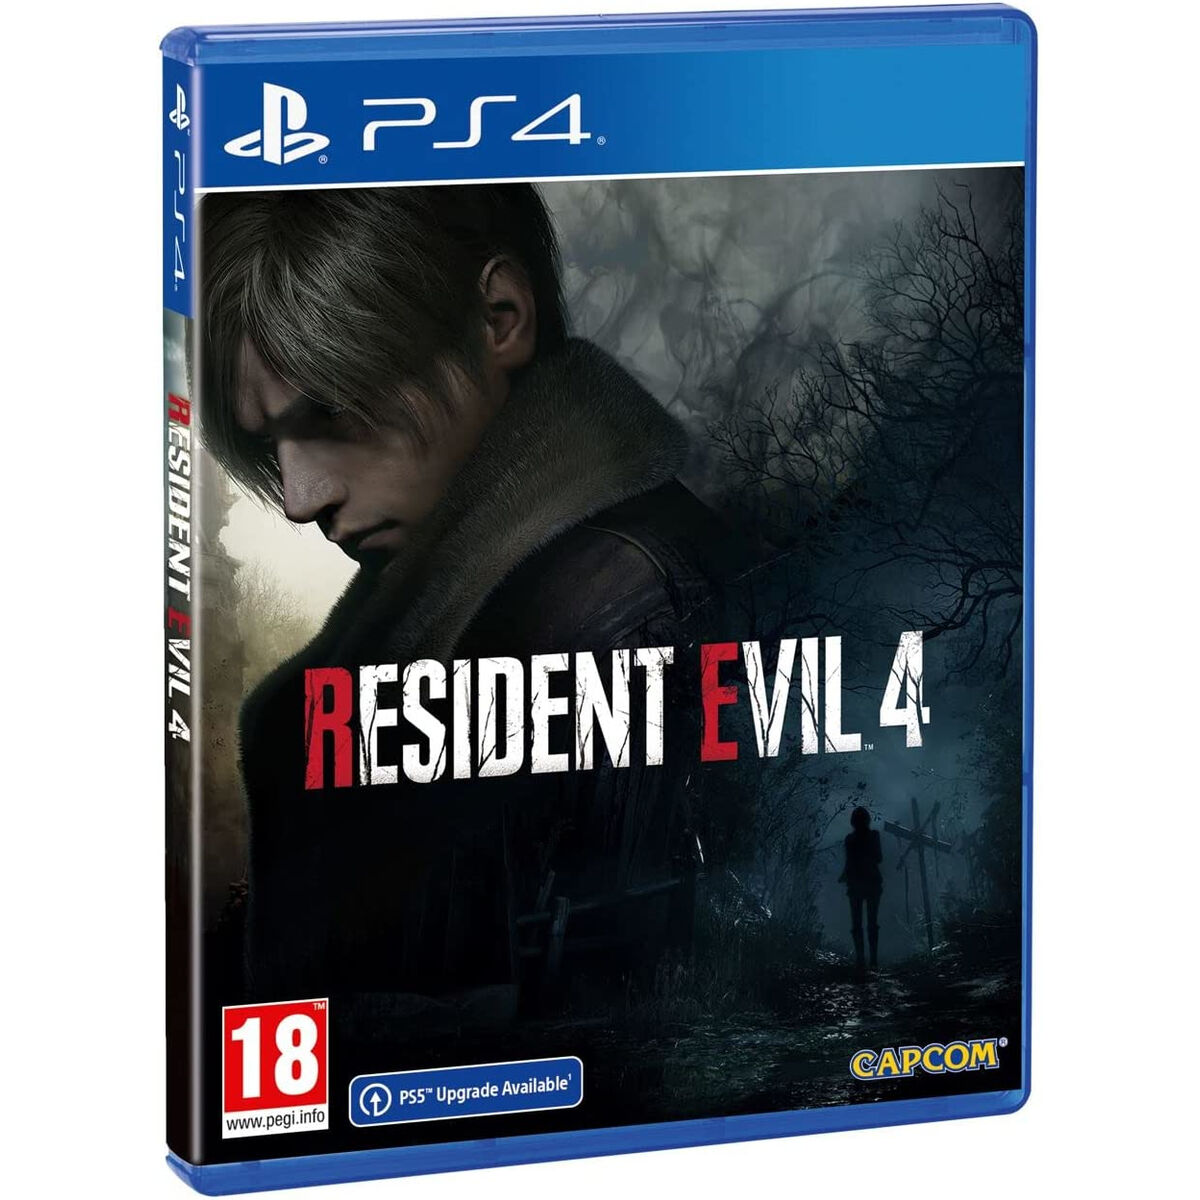 Videogioco PlayStation 4 Capcom Resident Evil 4